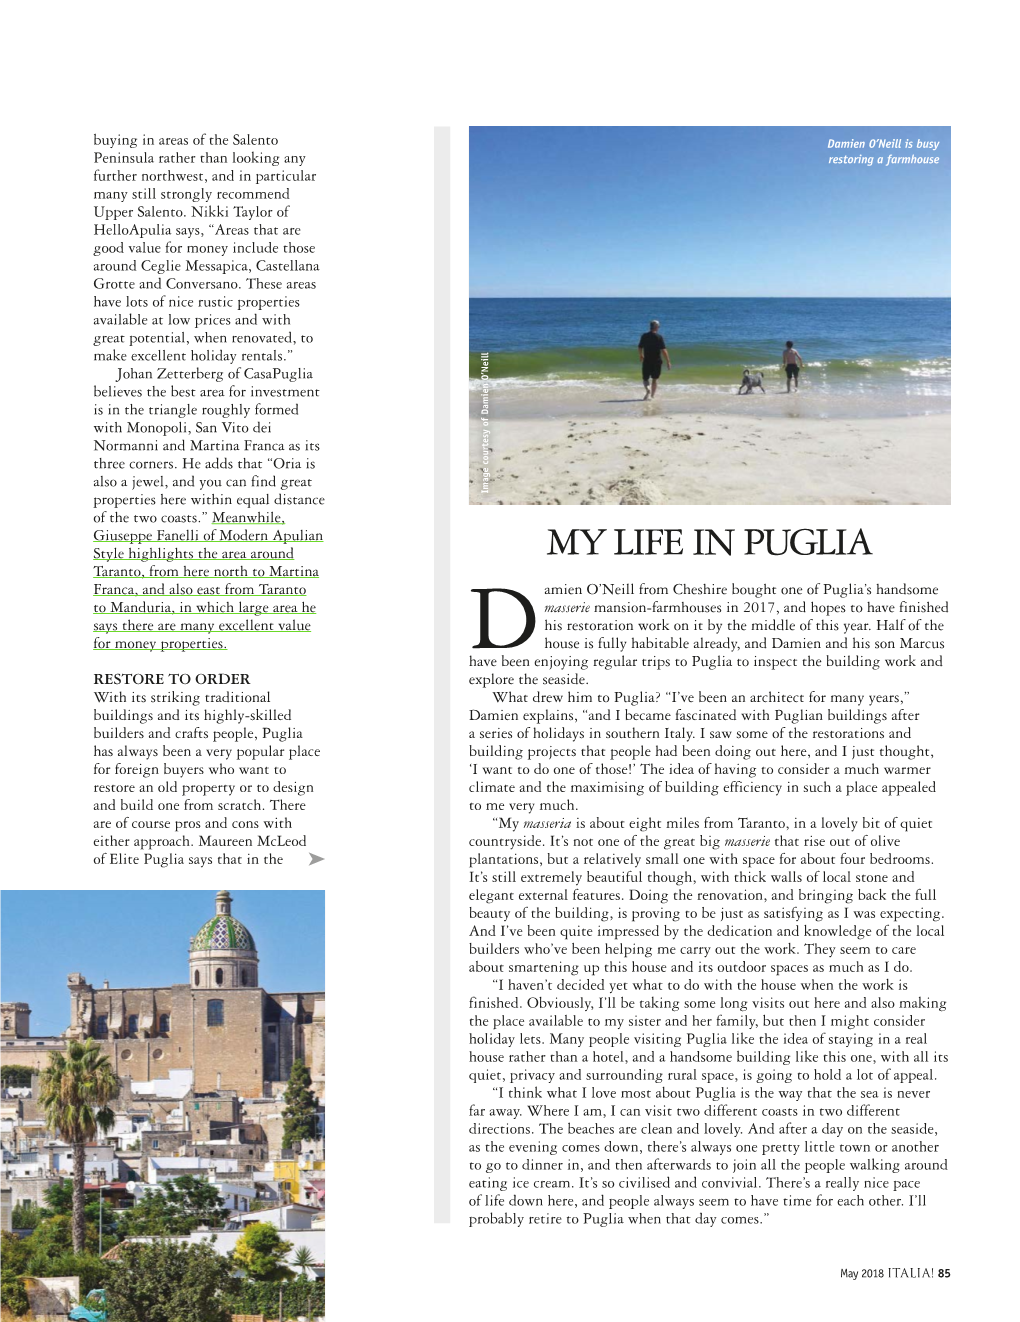 My Life in Puglia